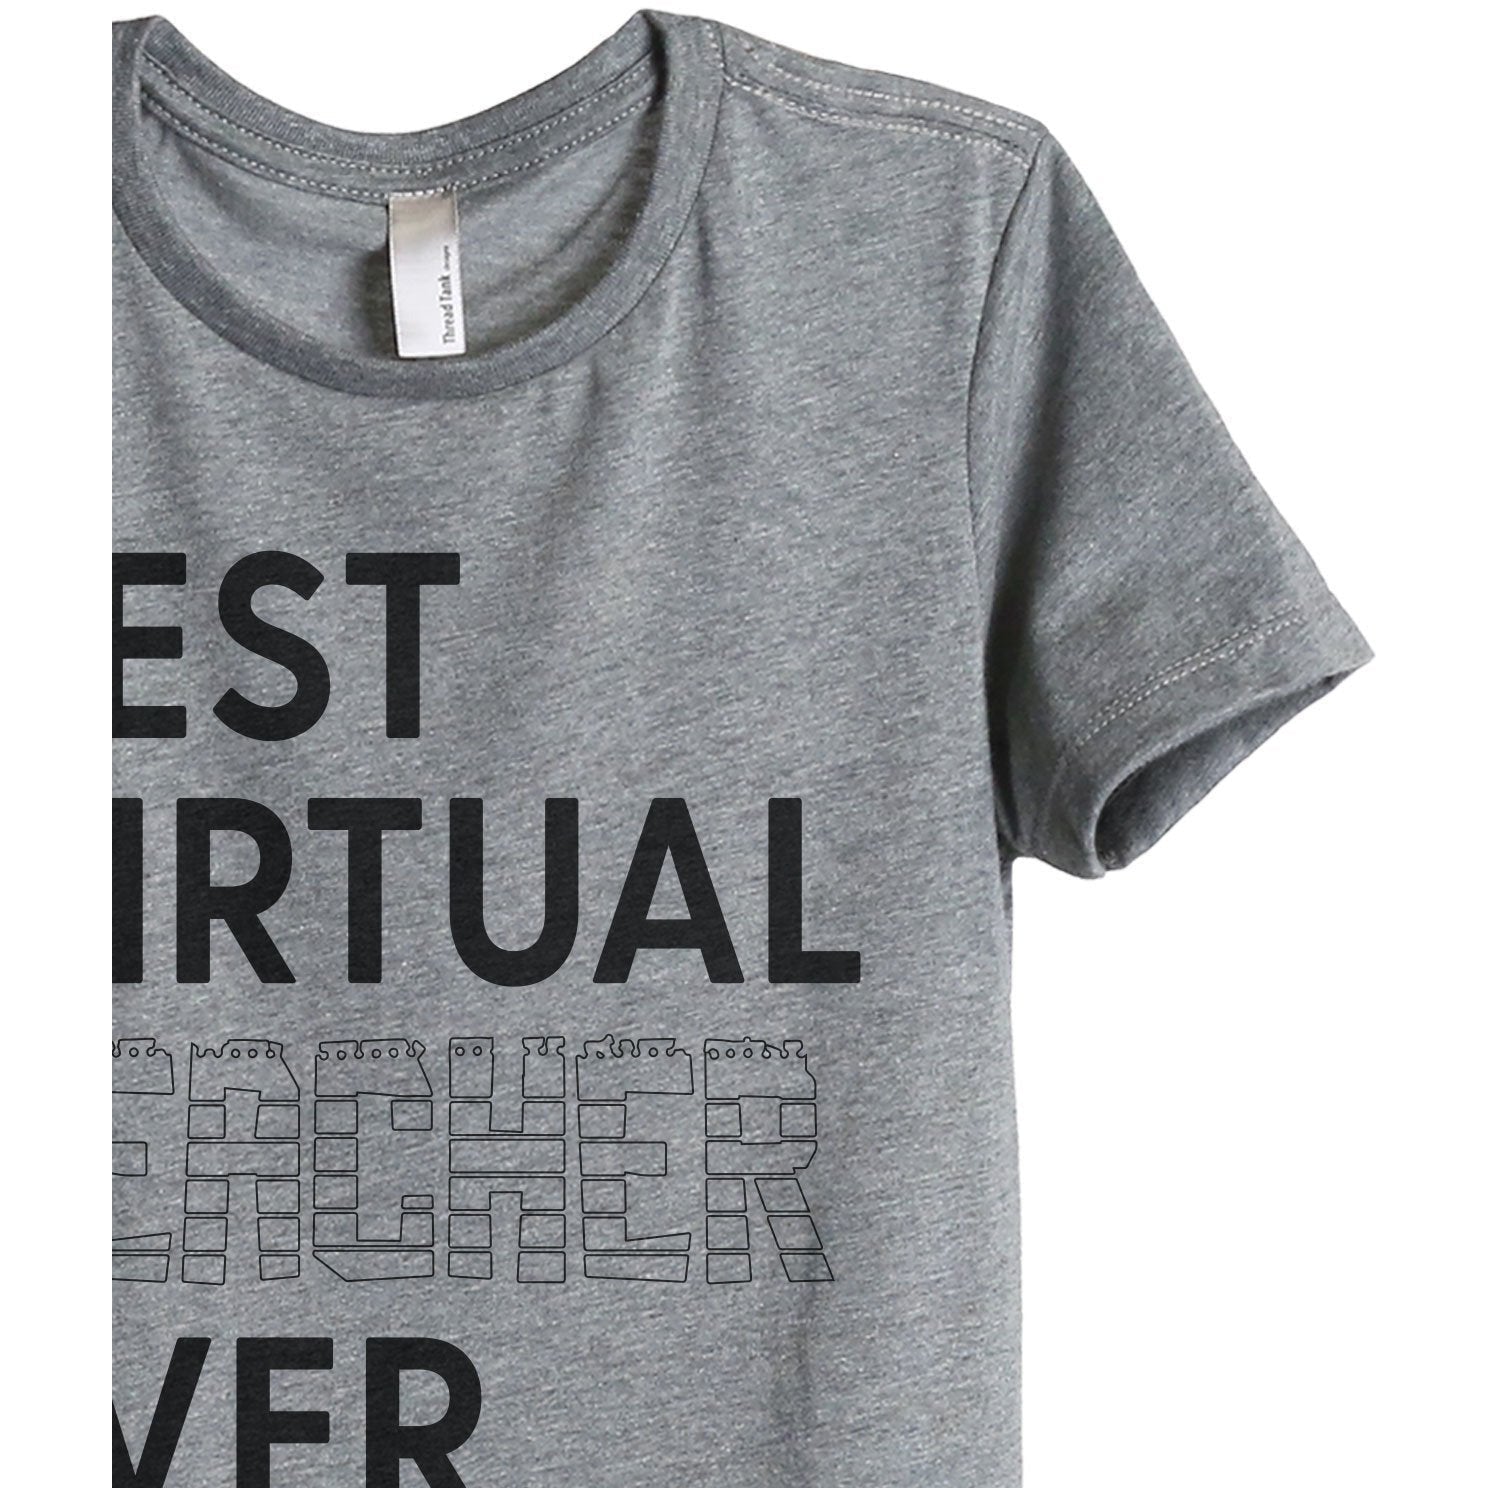 Best Virtual Teacher Ever Women's Relaxed Crewneck T-Shirt Top Tee Heather Grey Zoom Details
